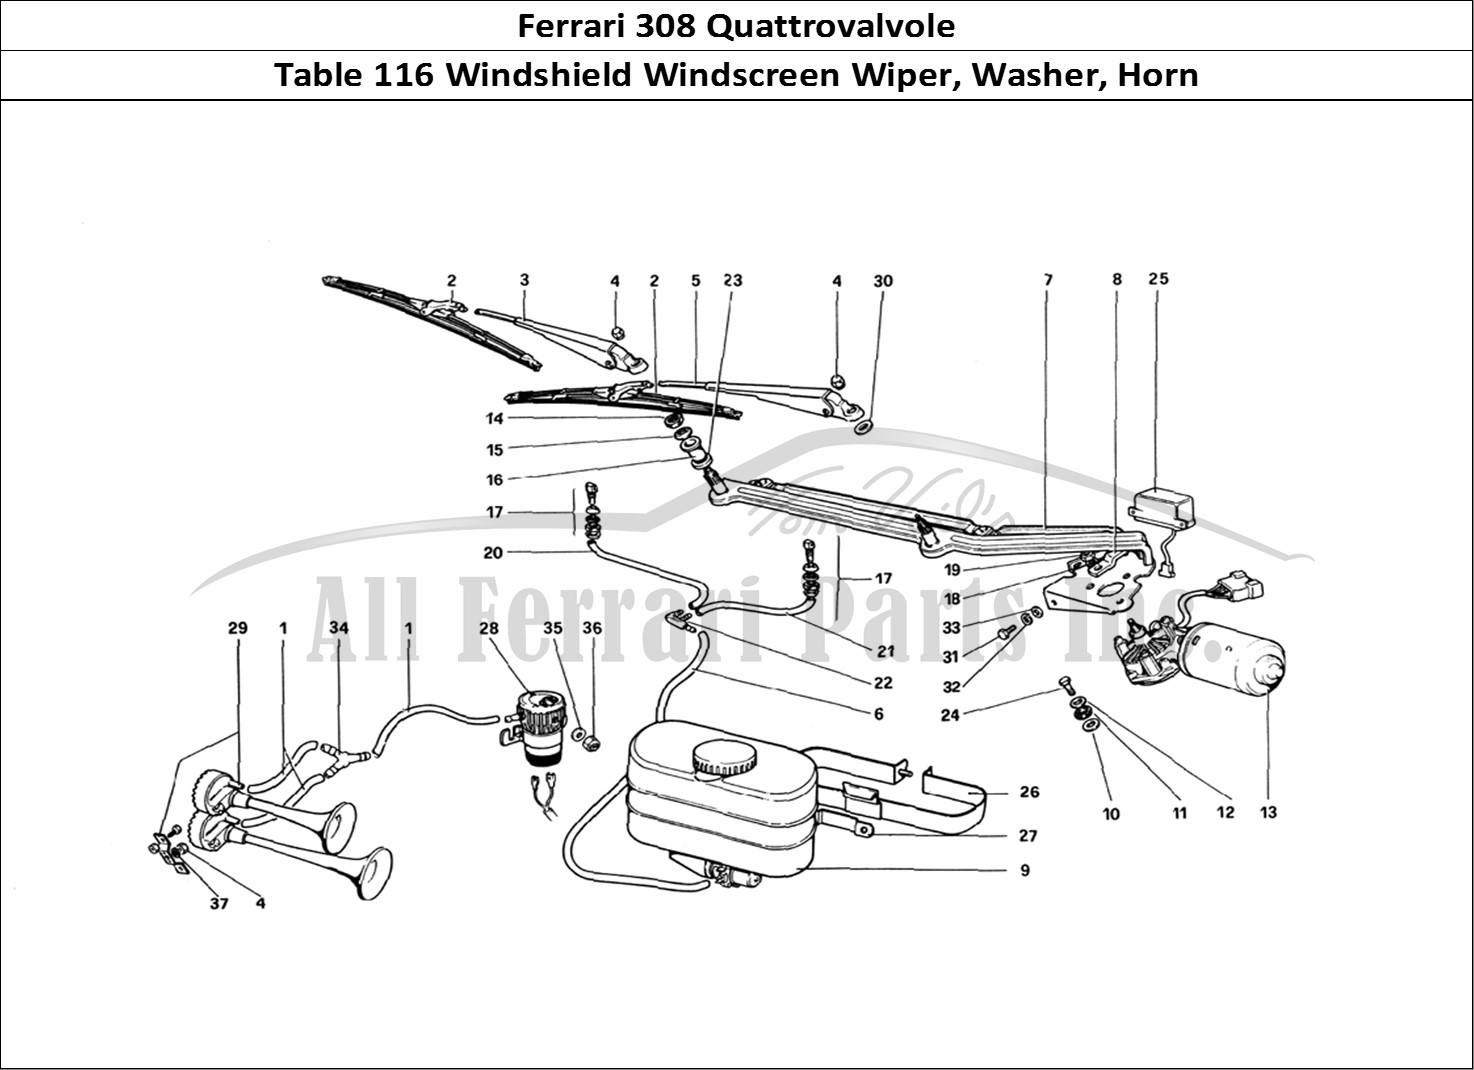 Ferrari Parts Ferrari 308 Quattrovalvole (1985) Page 116 Windshield Wiper, Washer